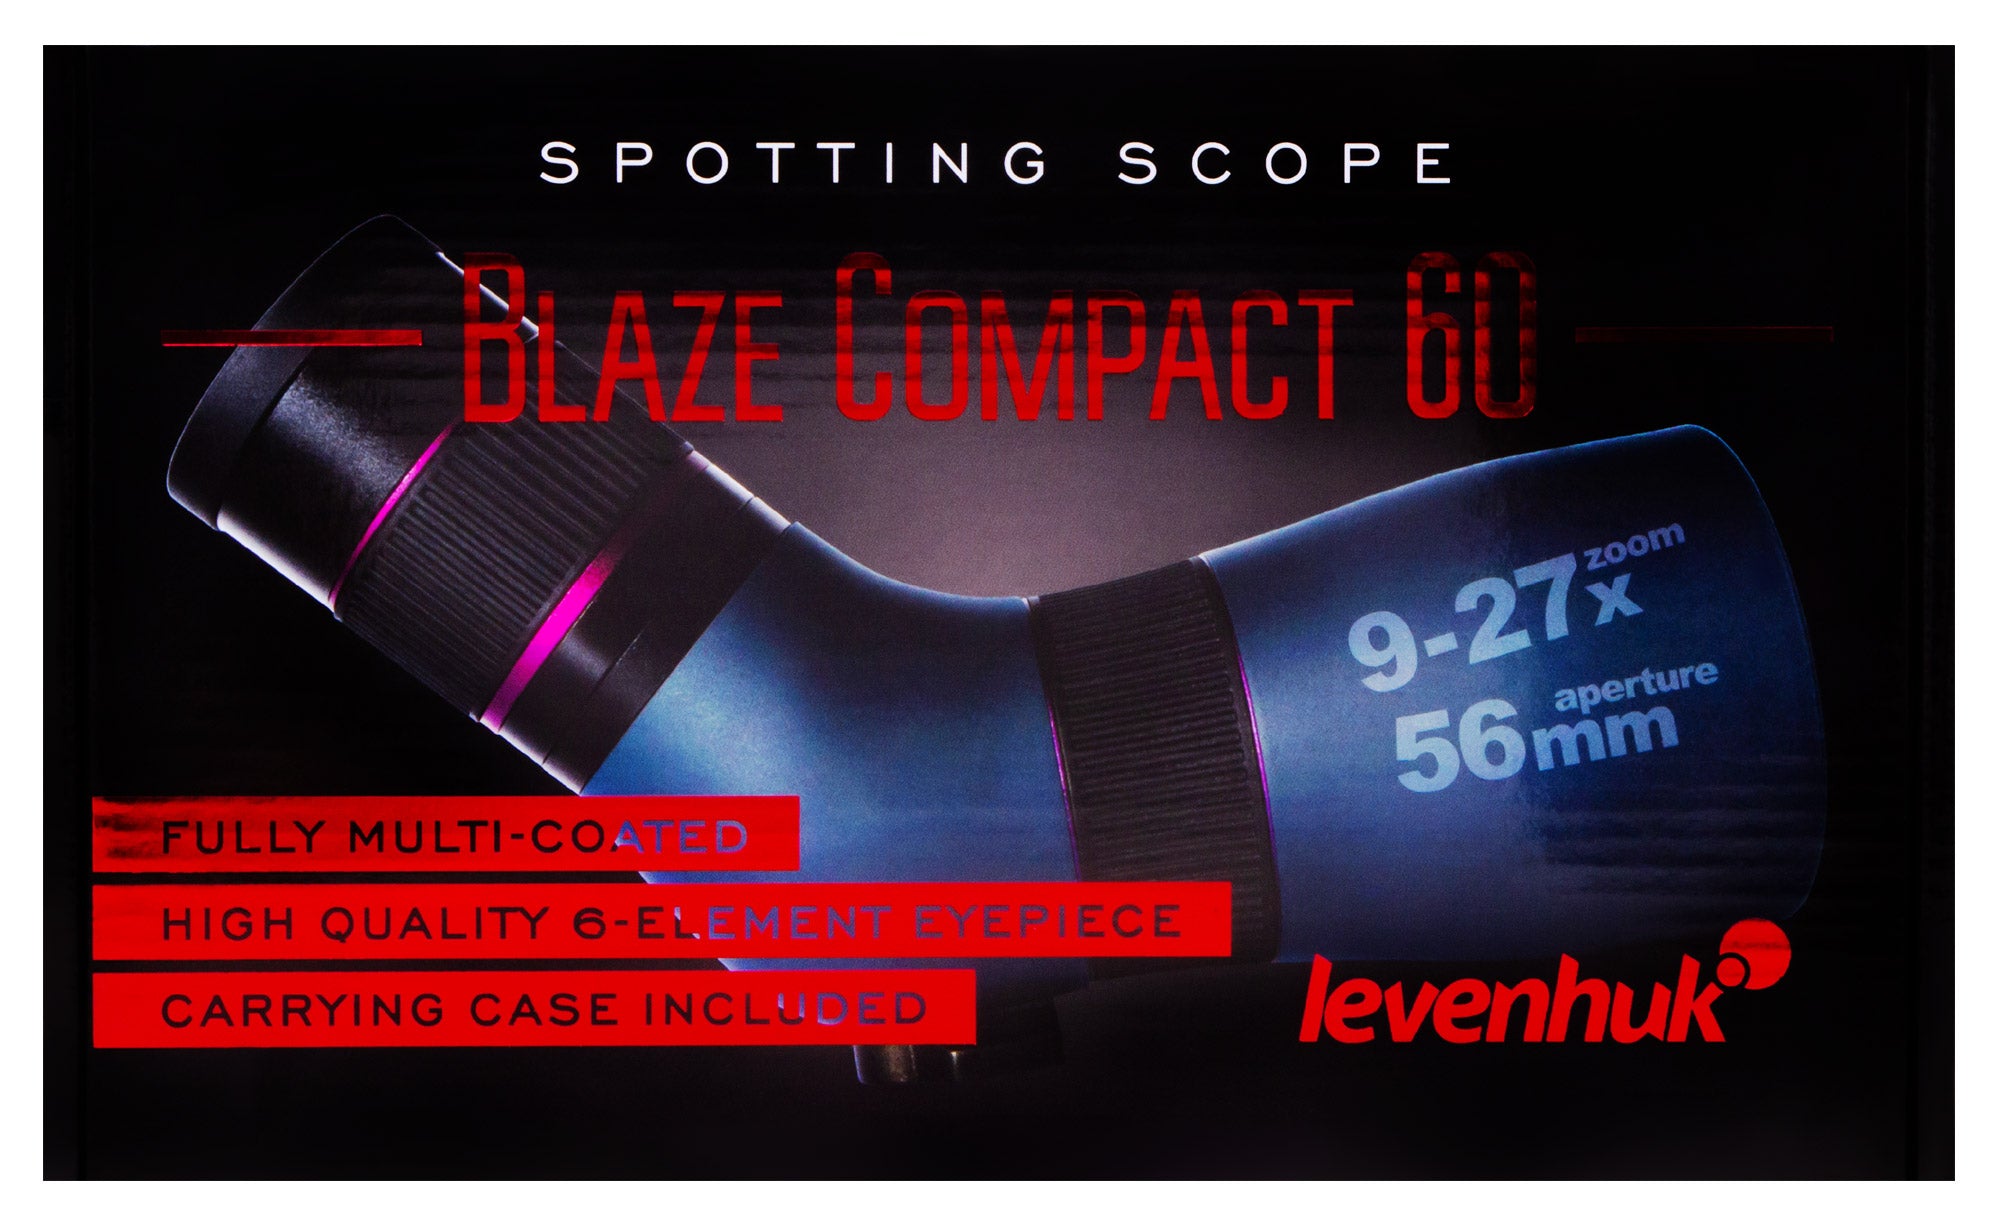 Levenhuk Blaze Compact 60 Spotting Scope